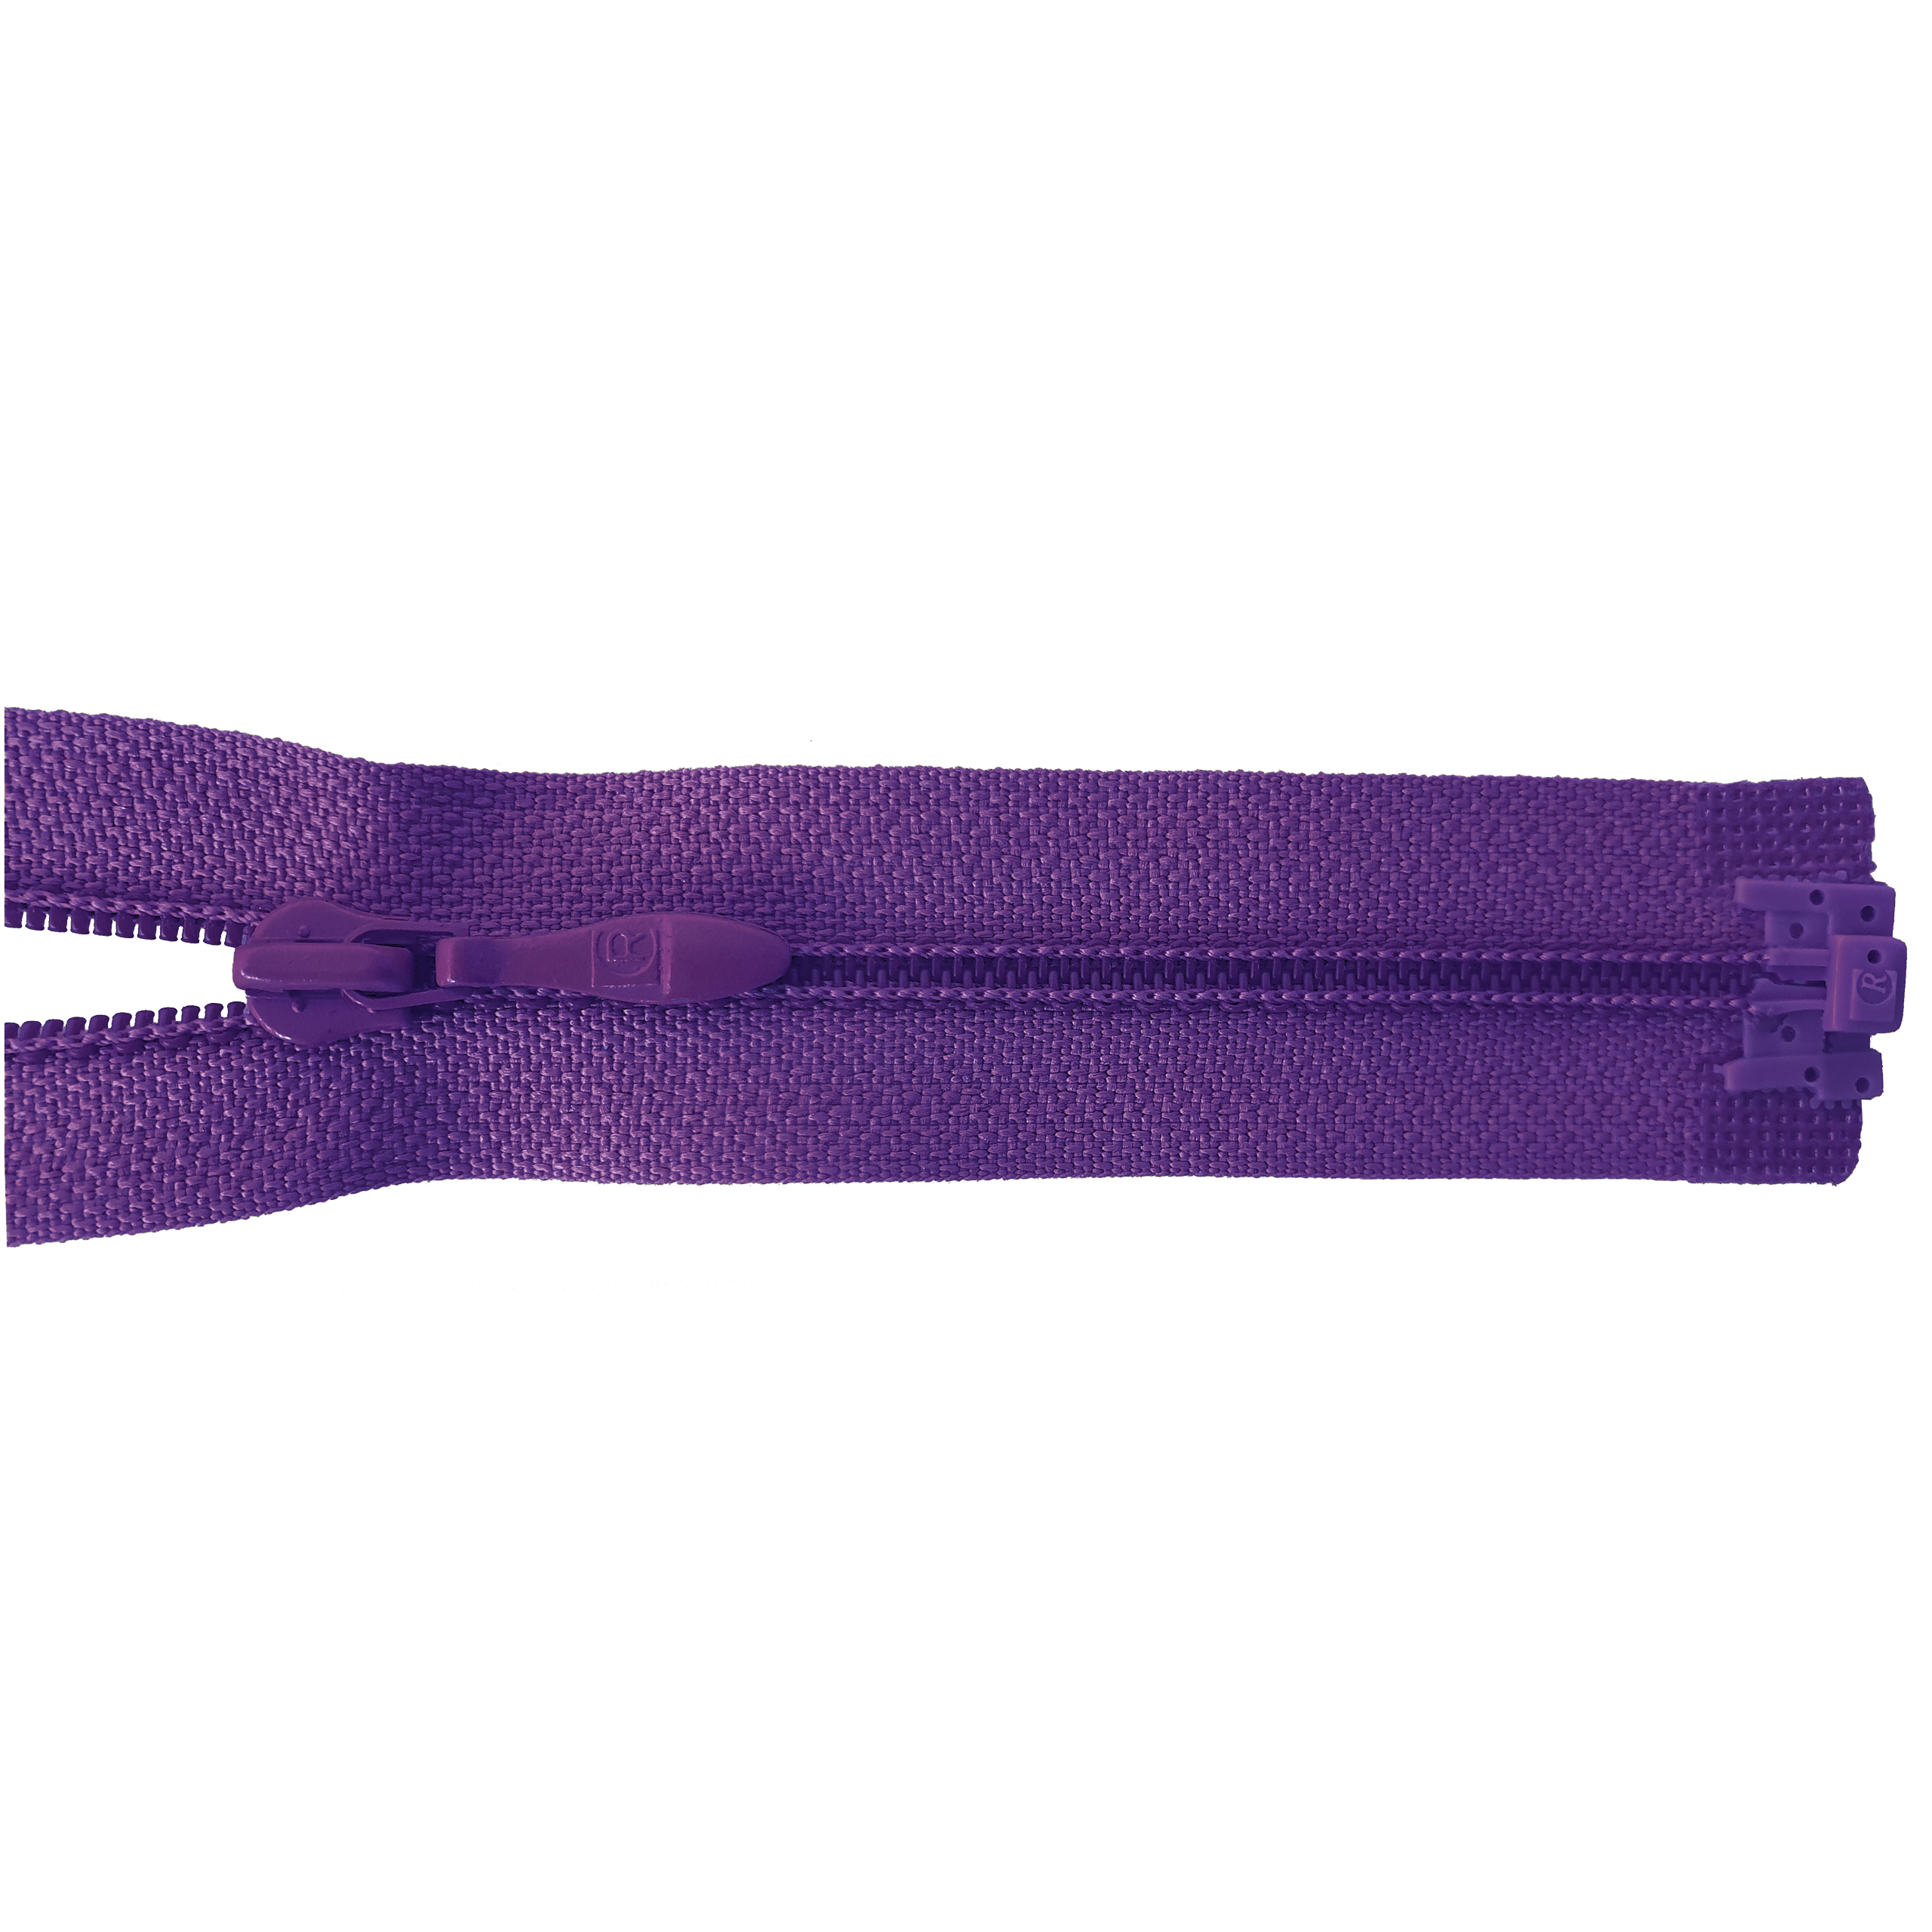 zipper 60cm,divisible, PES spiral, fein, purple